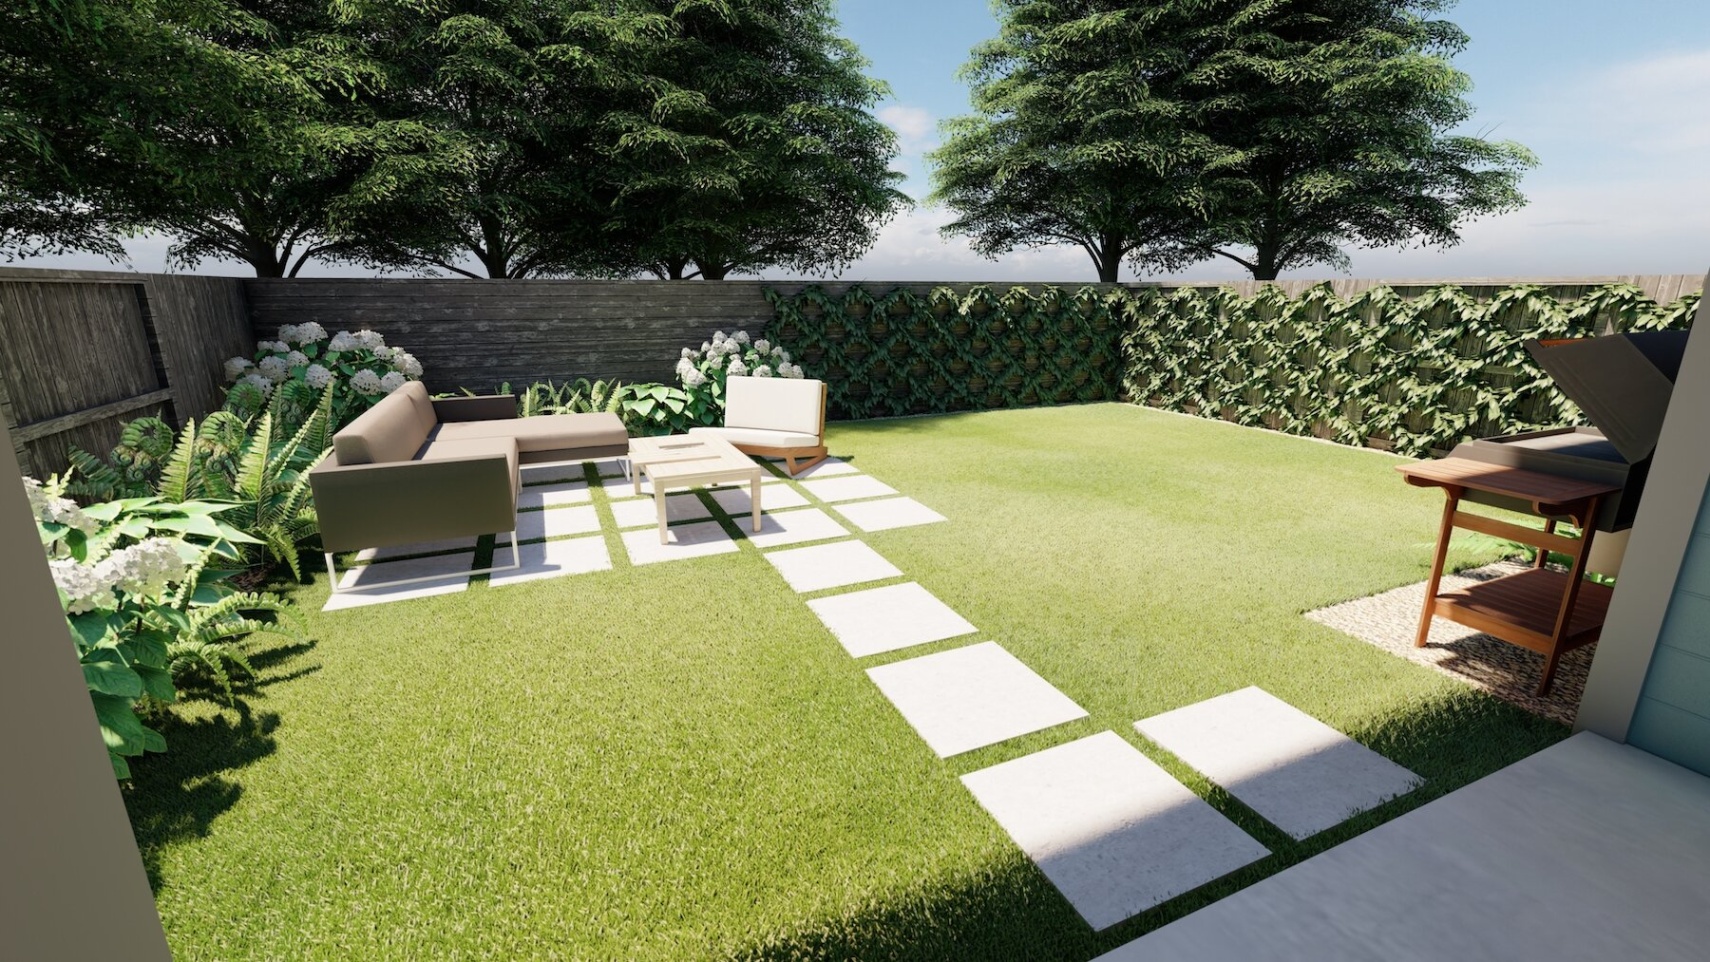 backyard design ideas on a budget Bulan 4 images.squarespace-cdn